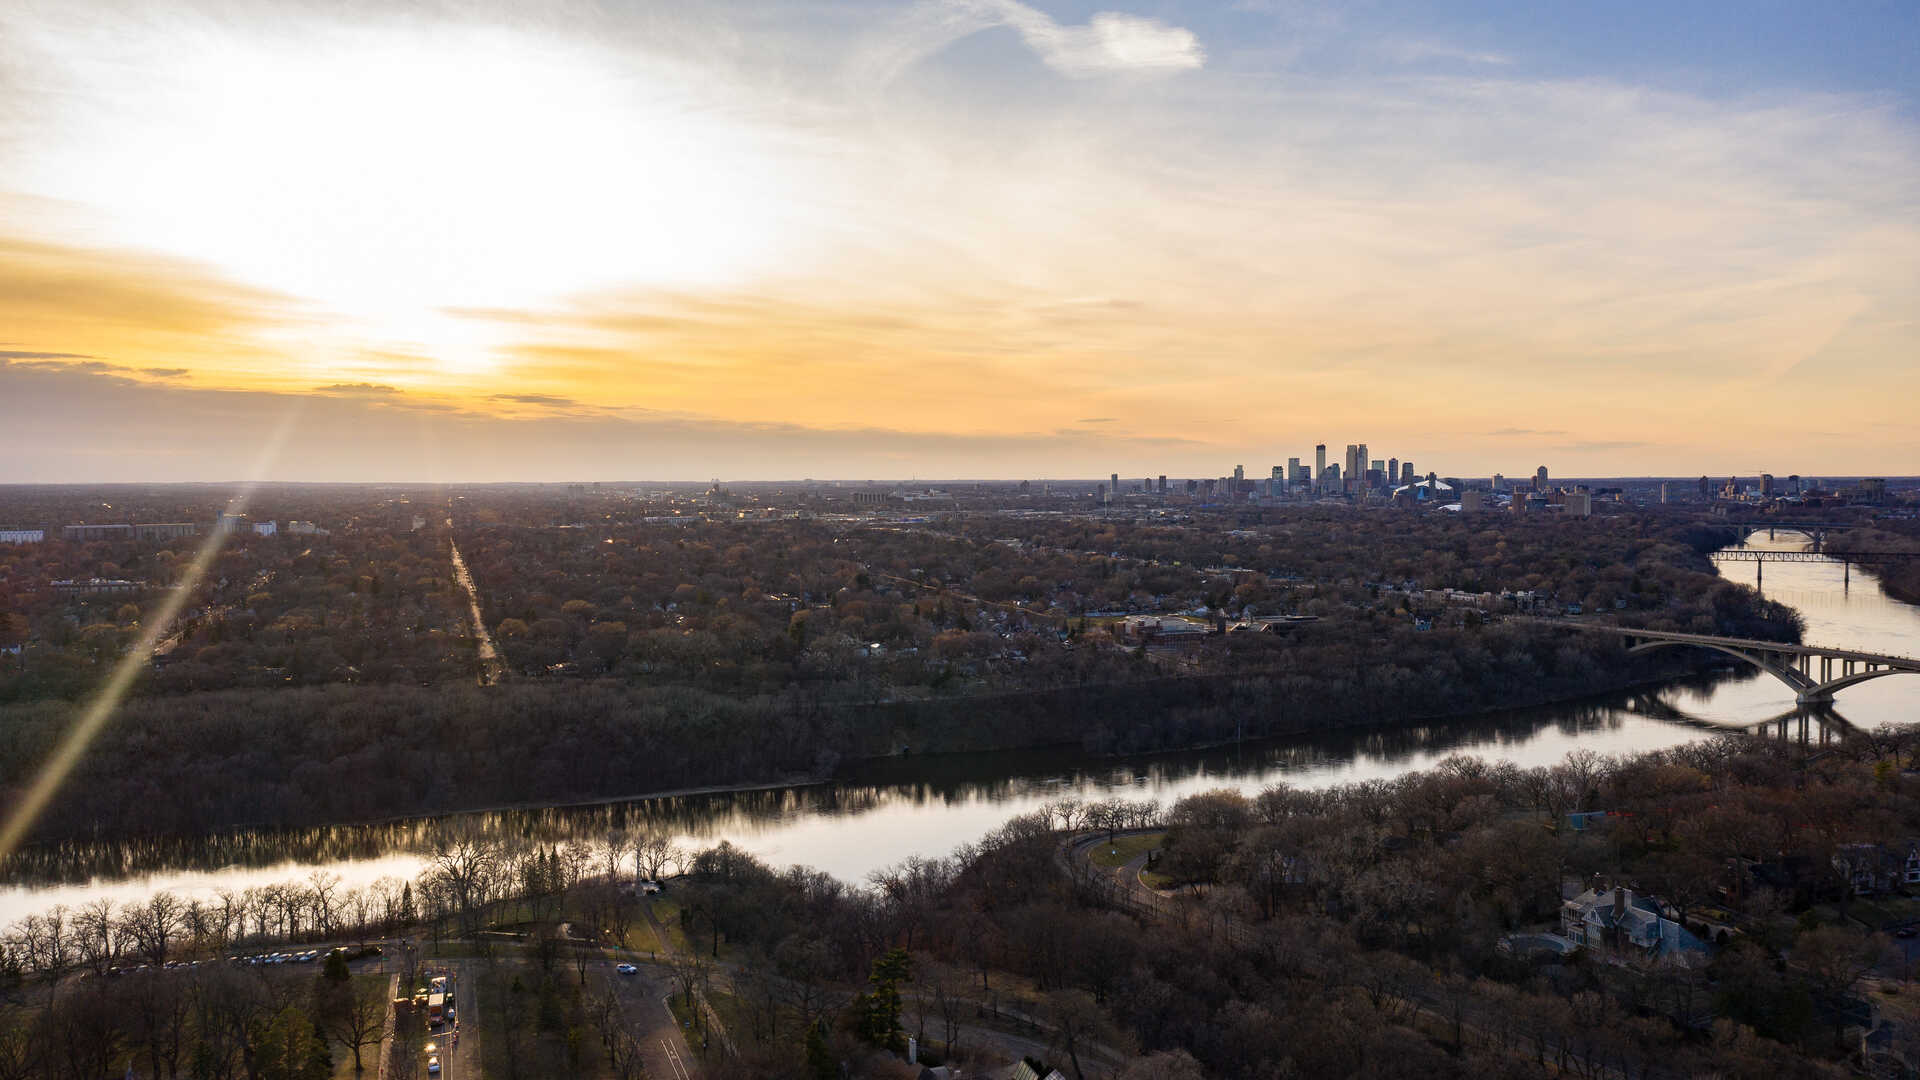 Cityscape view of Minneapolis